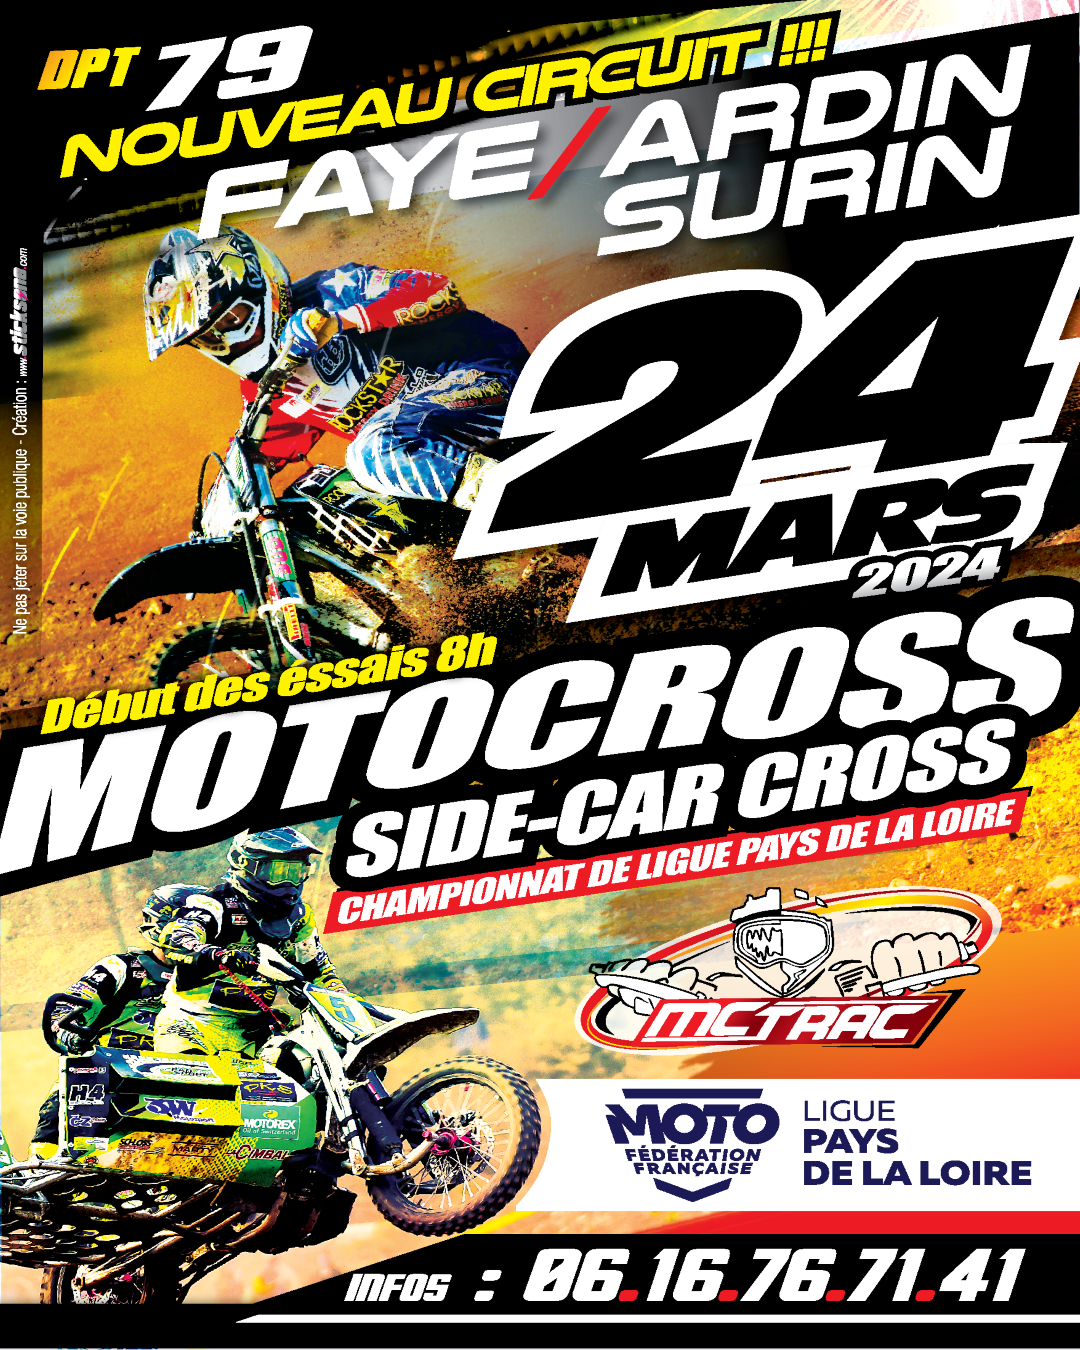 Info MOTOCROSS - épreuve Faye S/Ardin - Surin (79) 24 mars